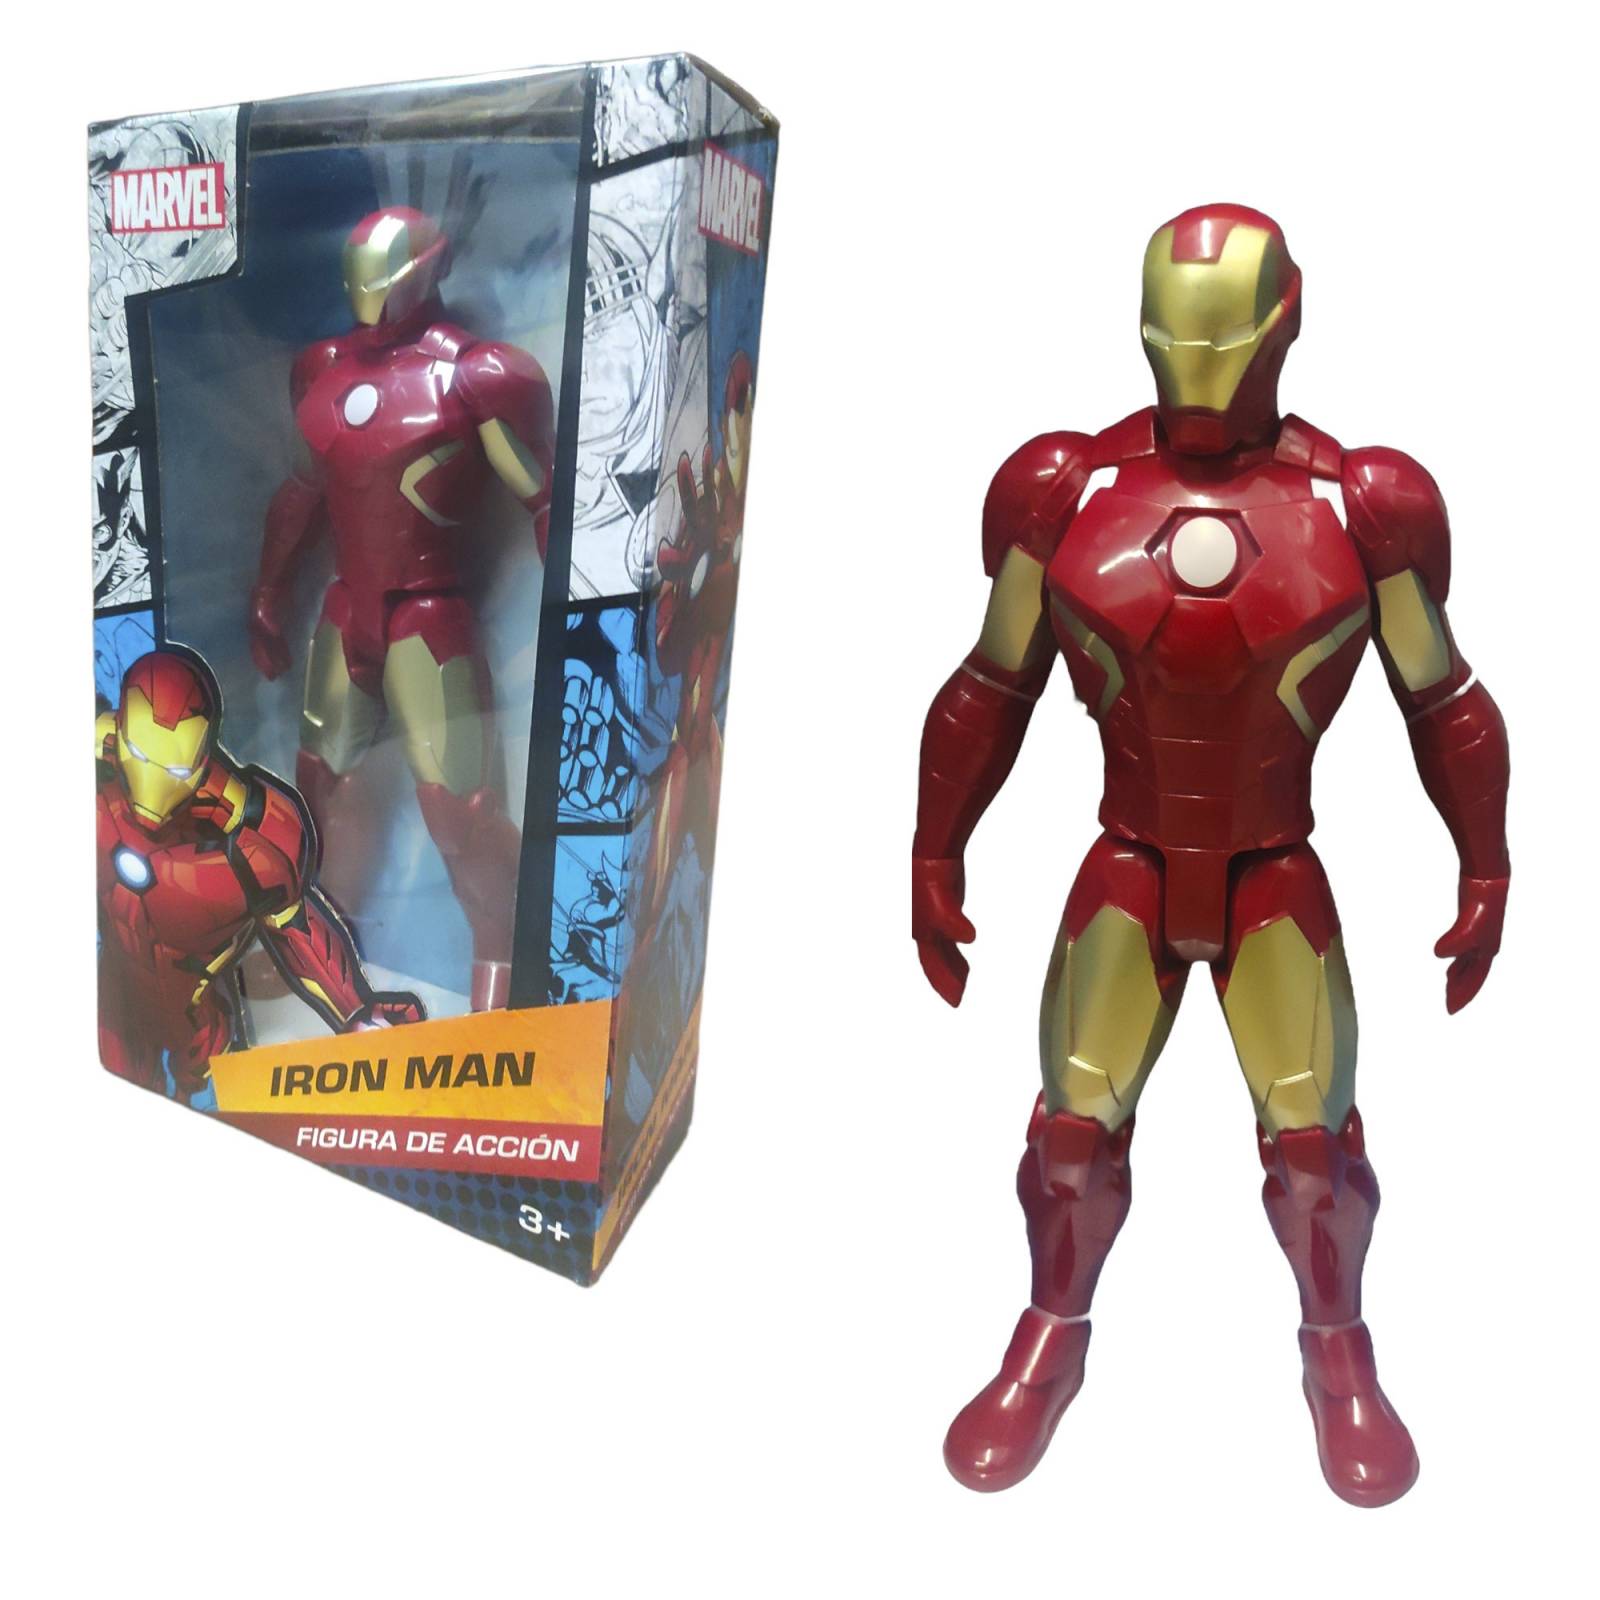 Patines en línea The Baby Shop Avengers Iron Man para niño